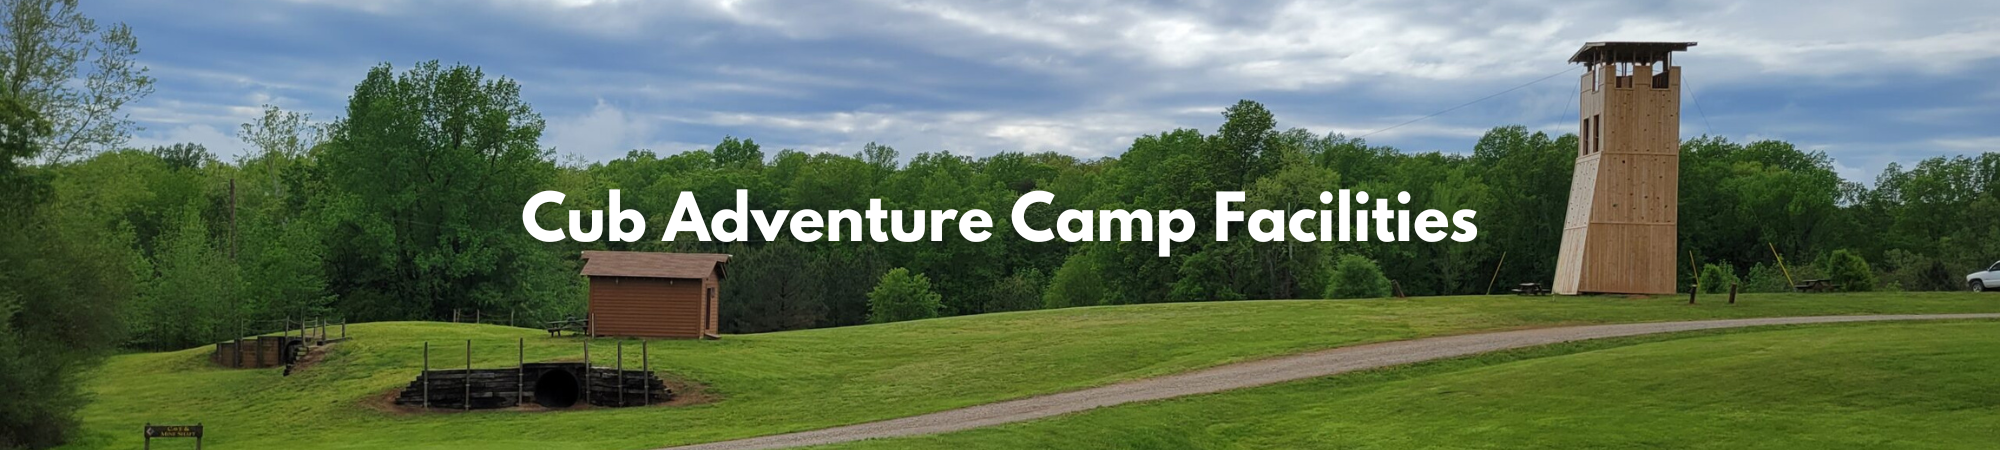 Cub Adventure Camp Facilities